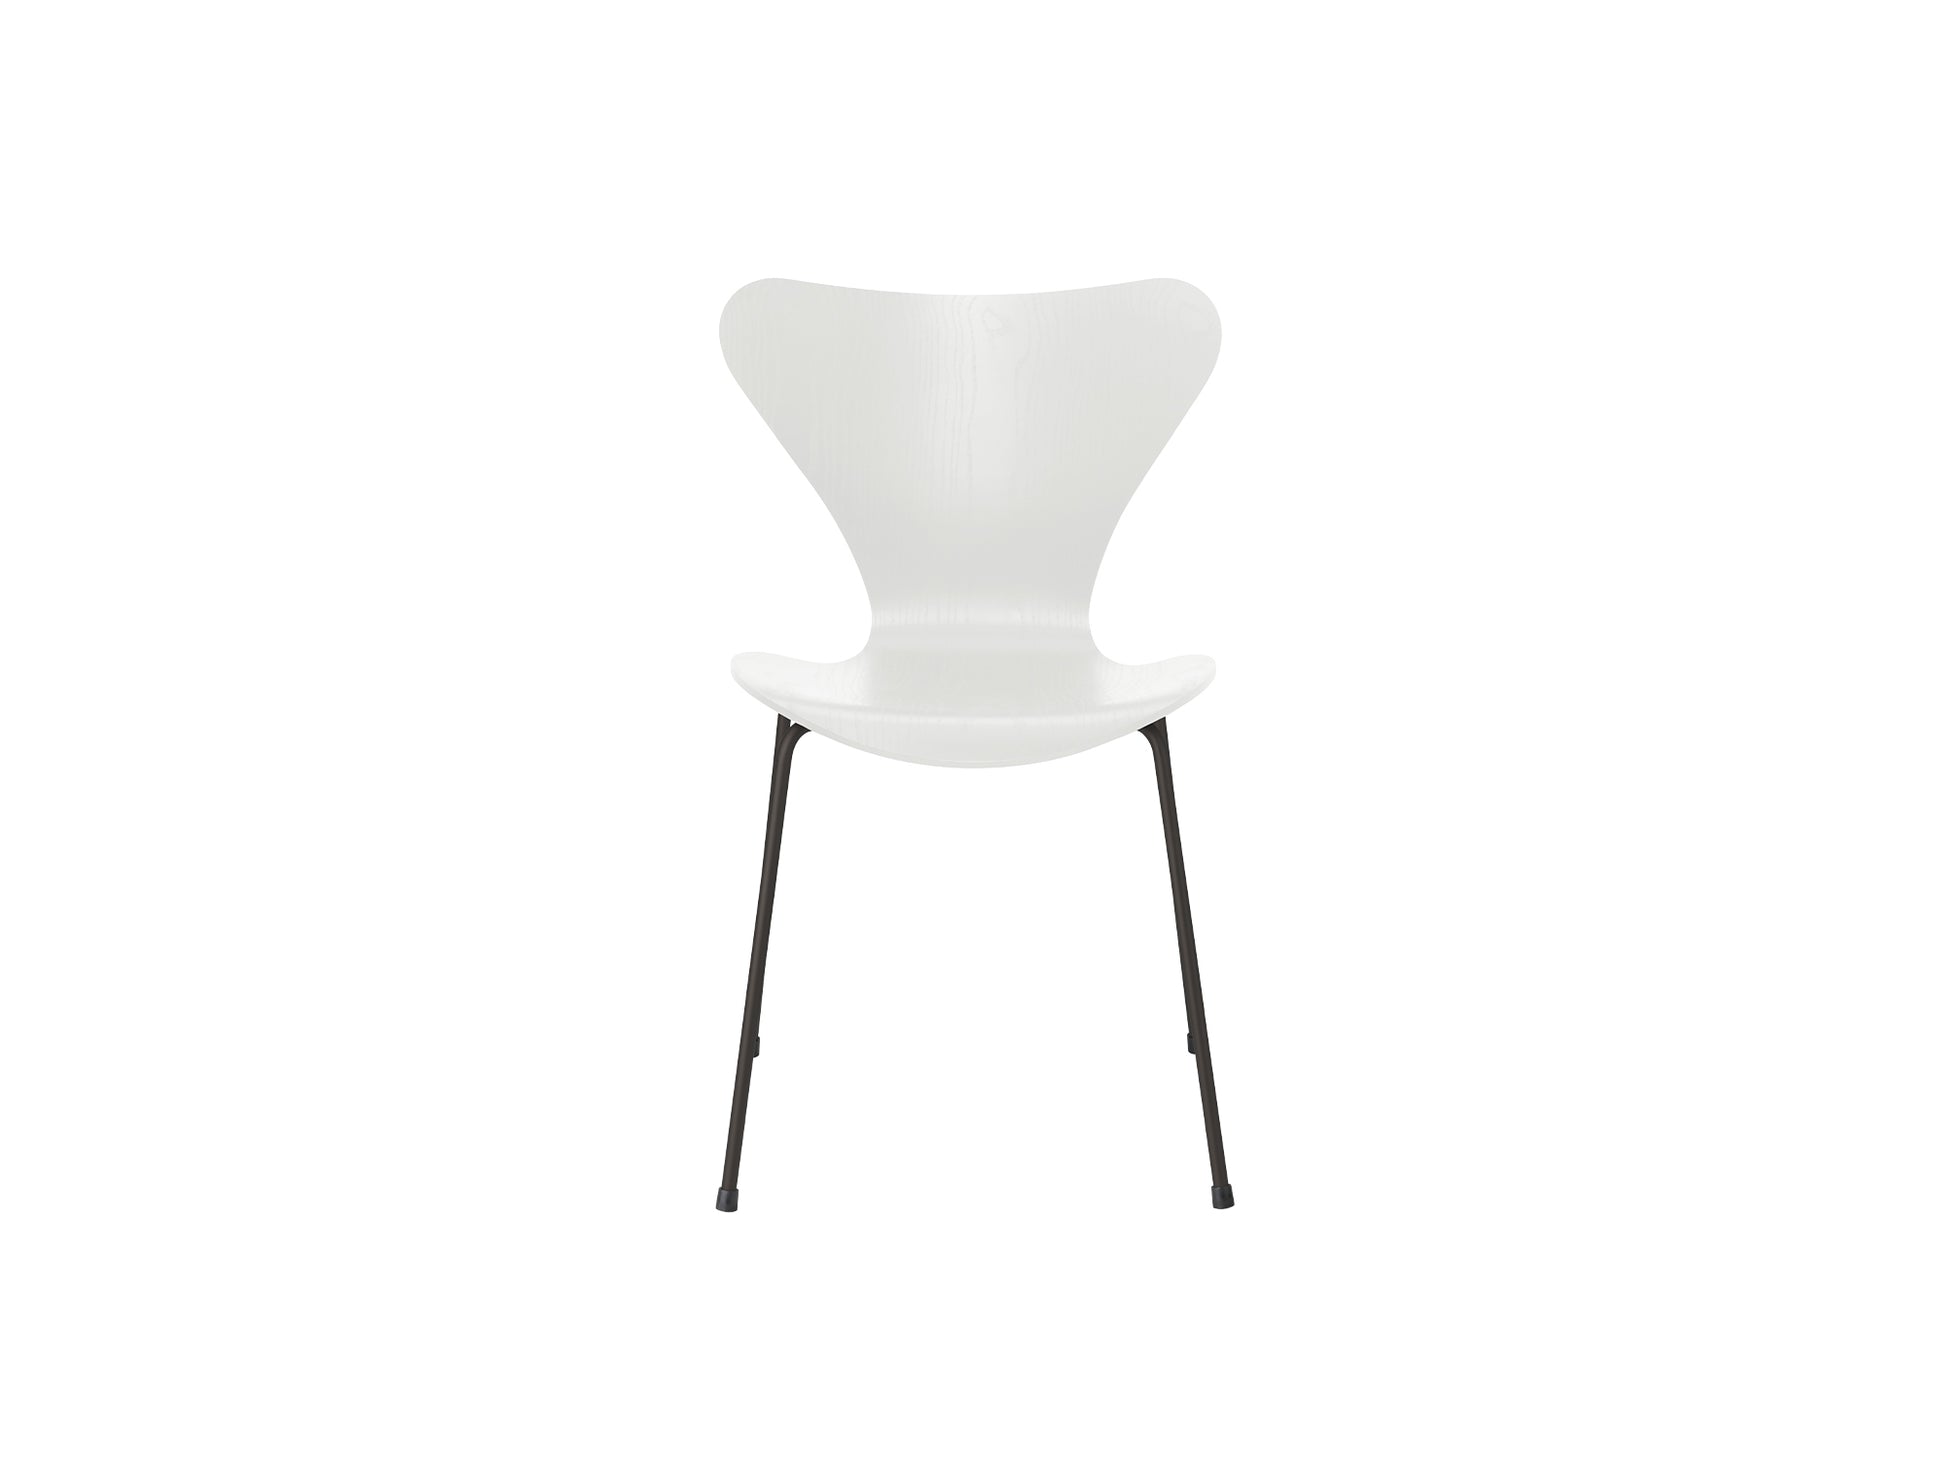 Series 7™ 3107 Dining Chair by Fritz Hansen - White Coloured Ash Veneer Shell / Warm Graphite Steel